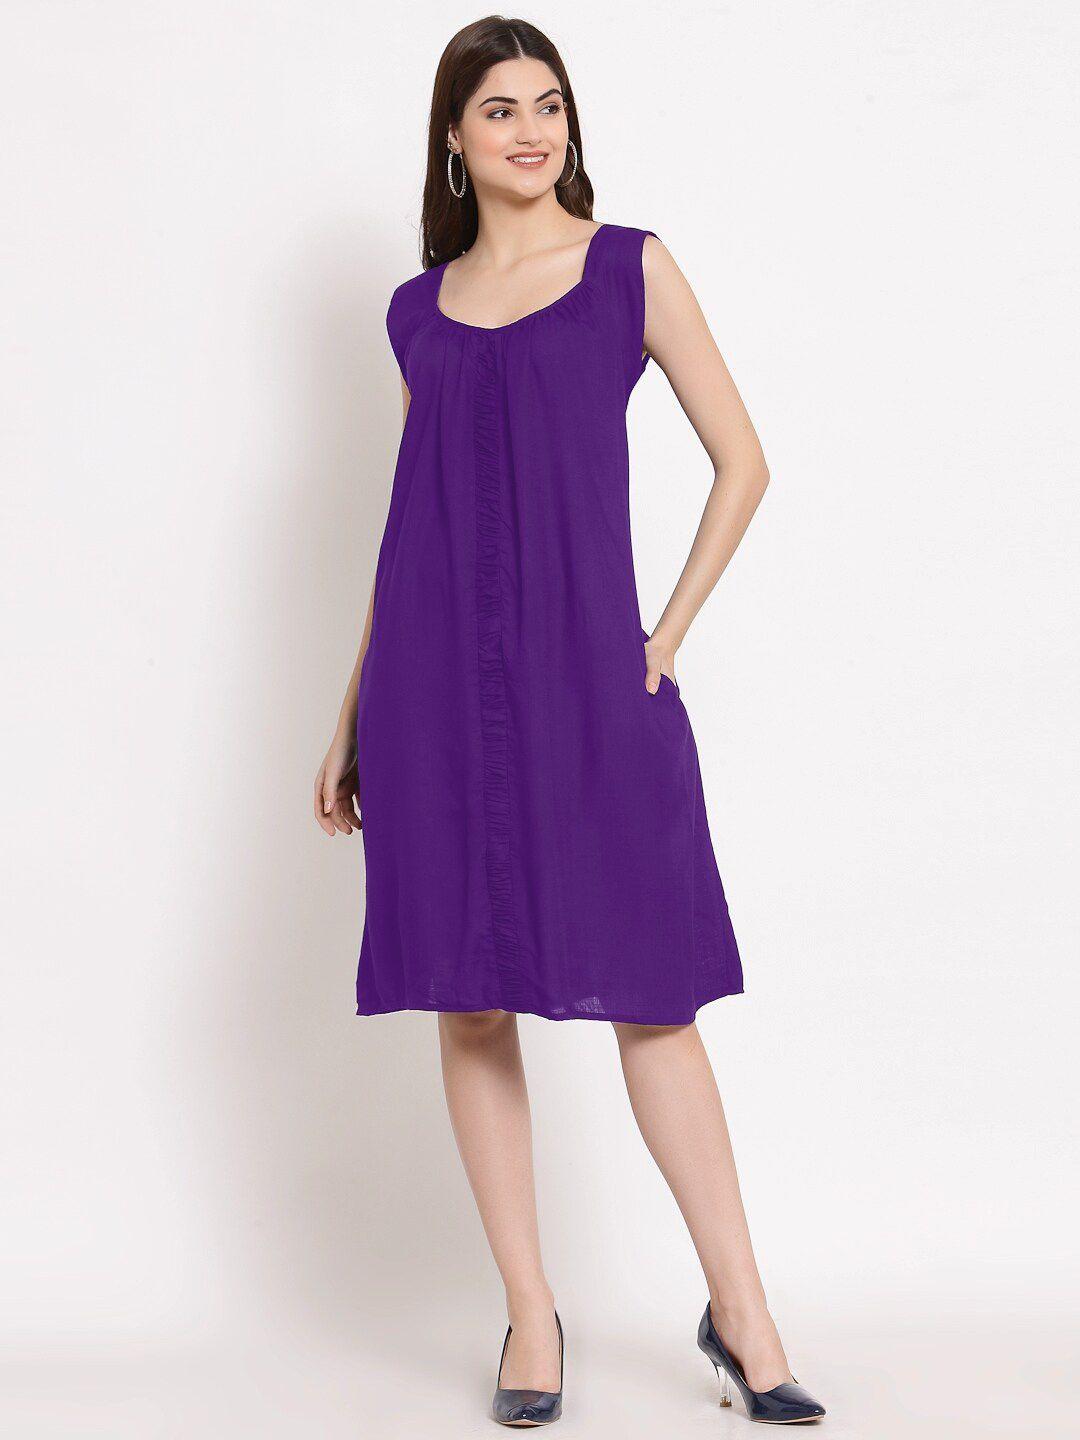 patrorna-women-purple-nightdress